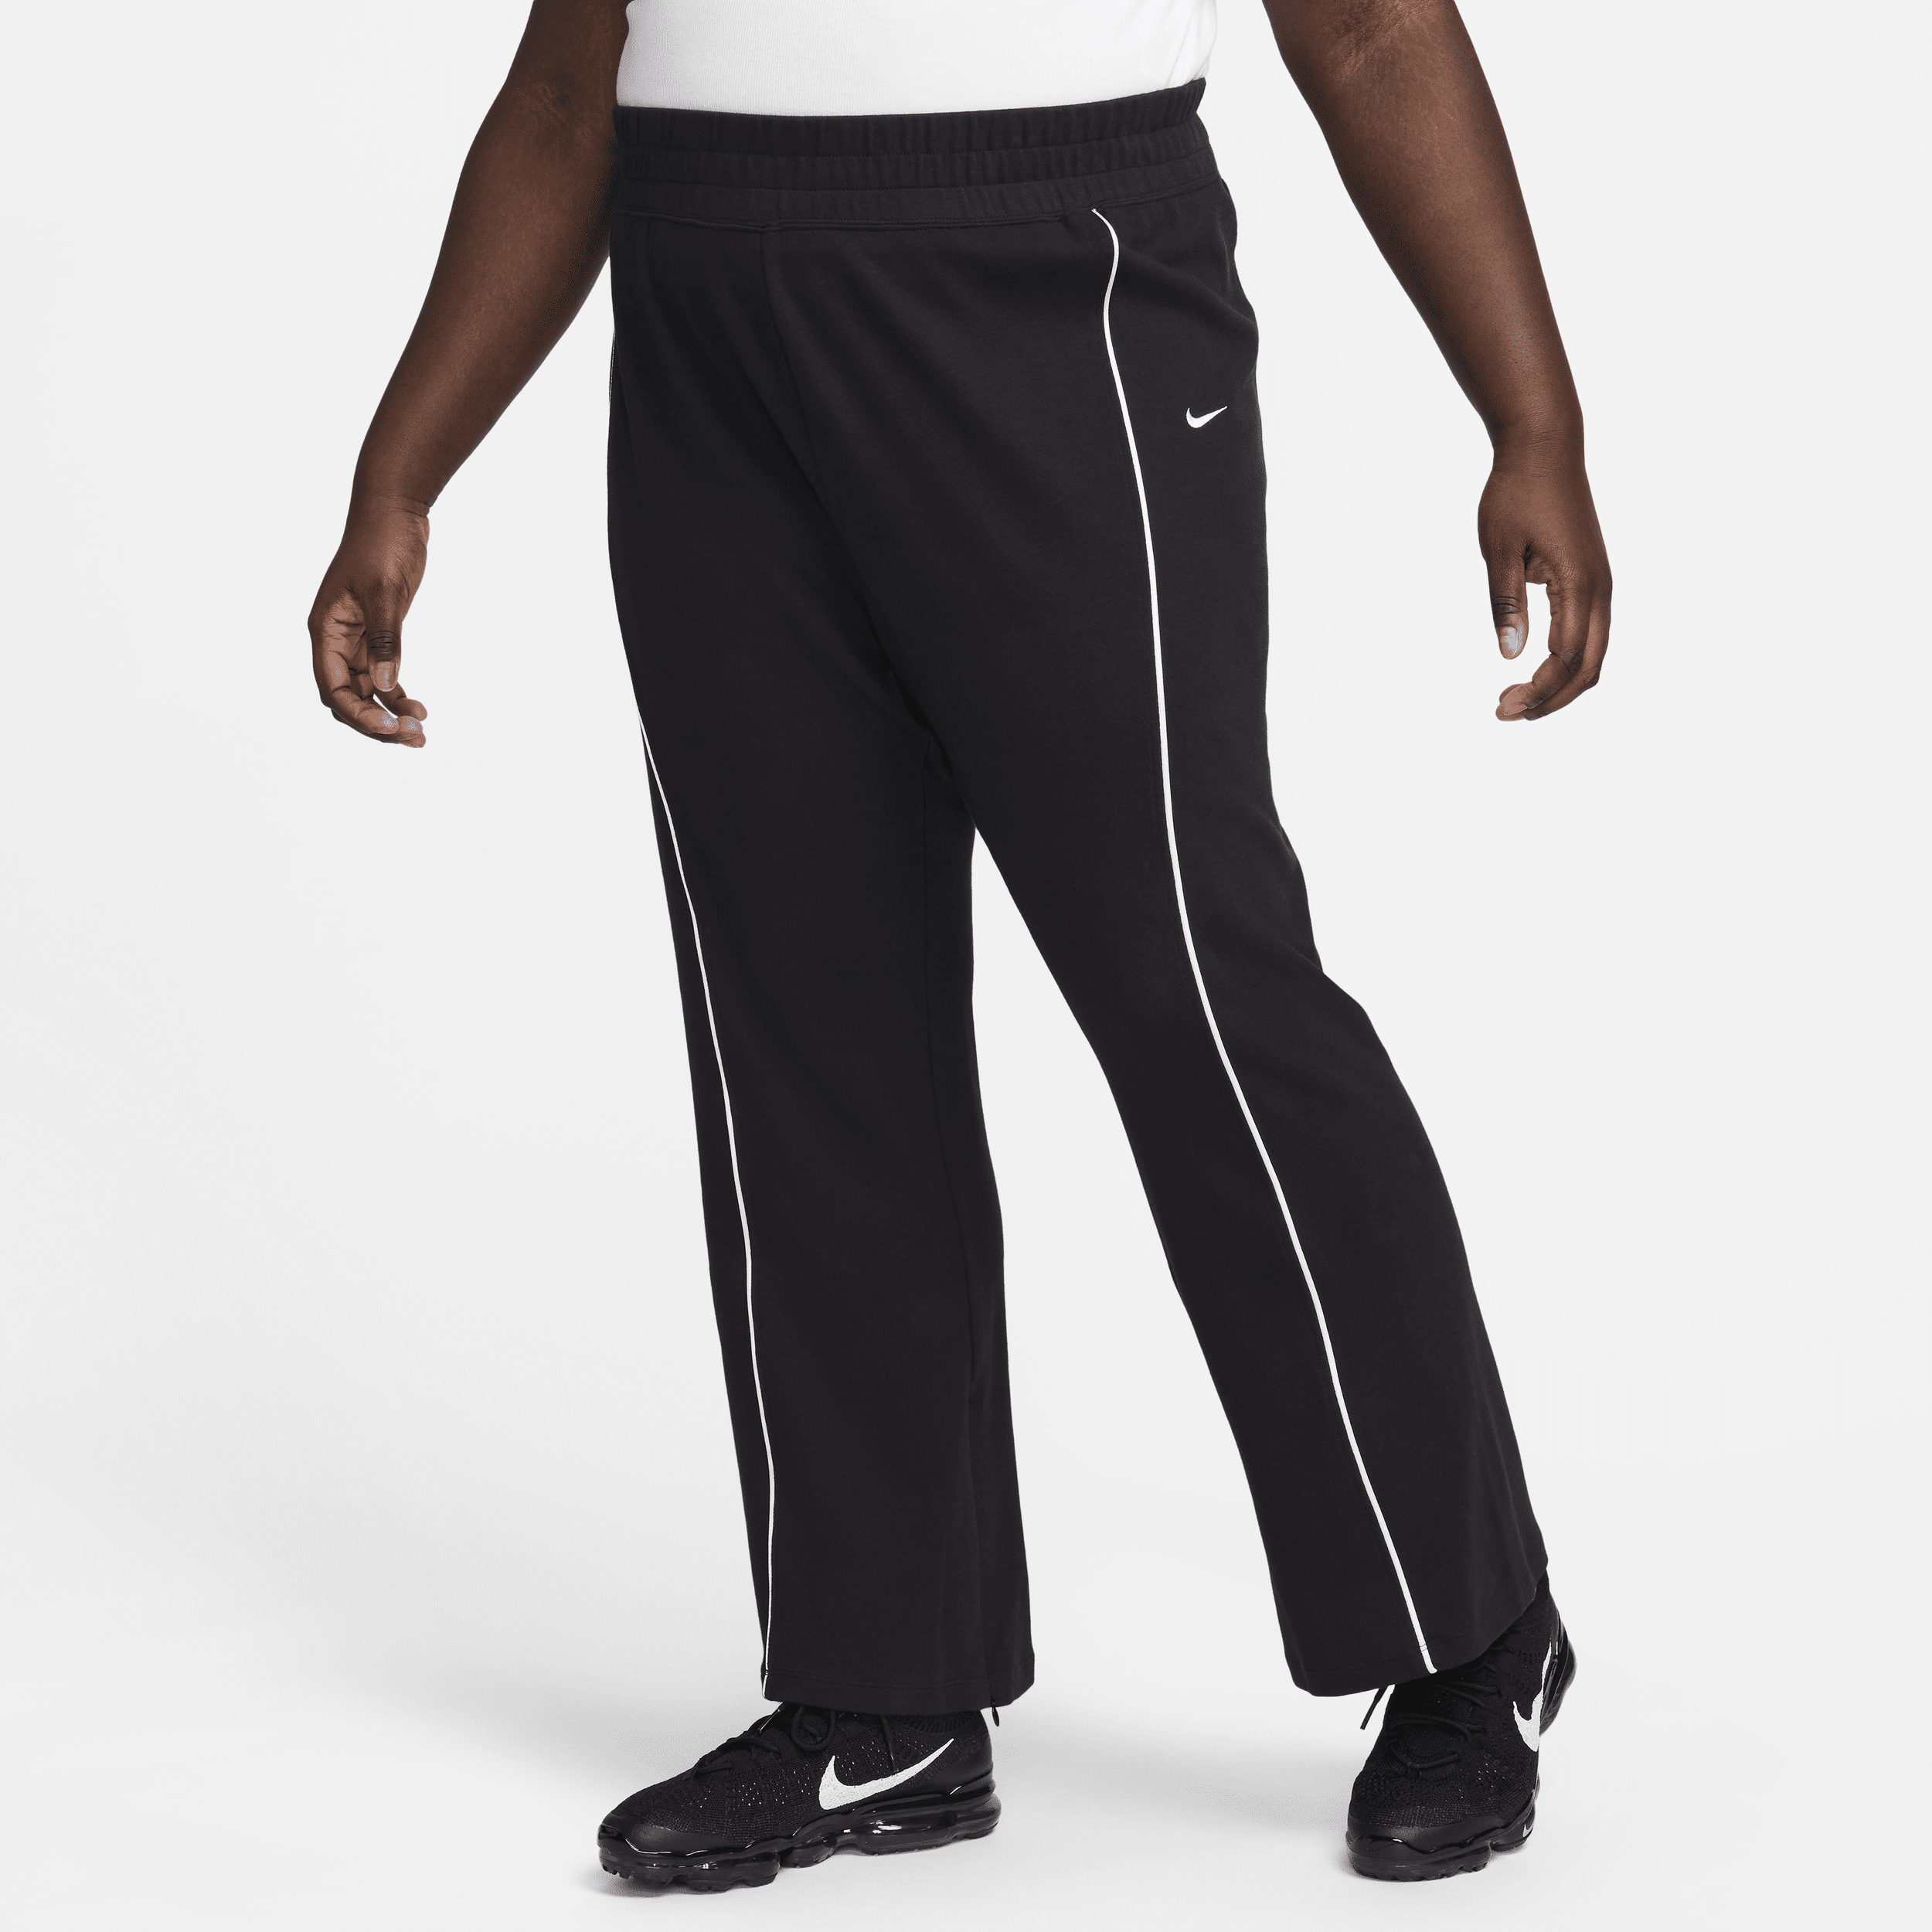 Bukser med slidskanter fra Nike Sportswear-kollektionen til kvinder (plus size) - sort